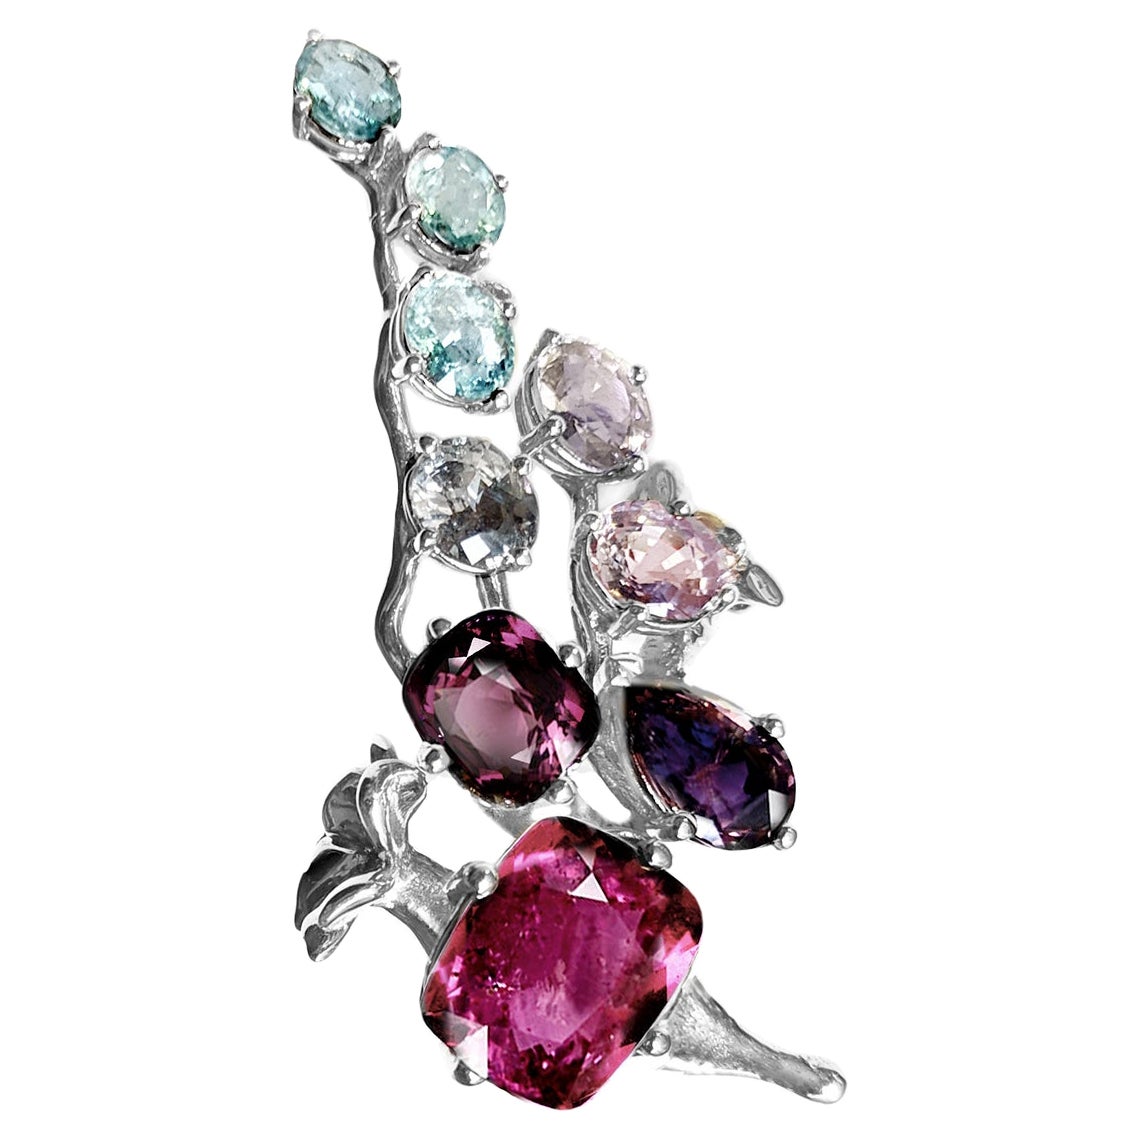 Eighteen Karat White Gold Fourteen Carats Gems Cluster Ring with Pink Sapphire